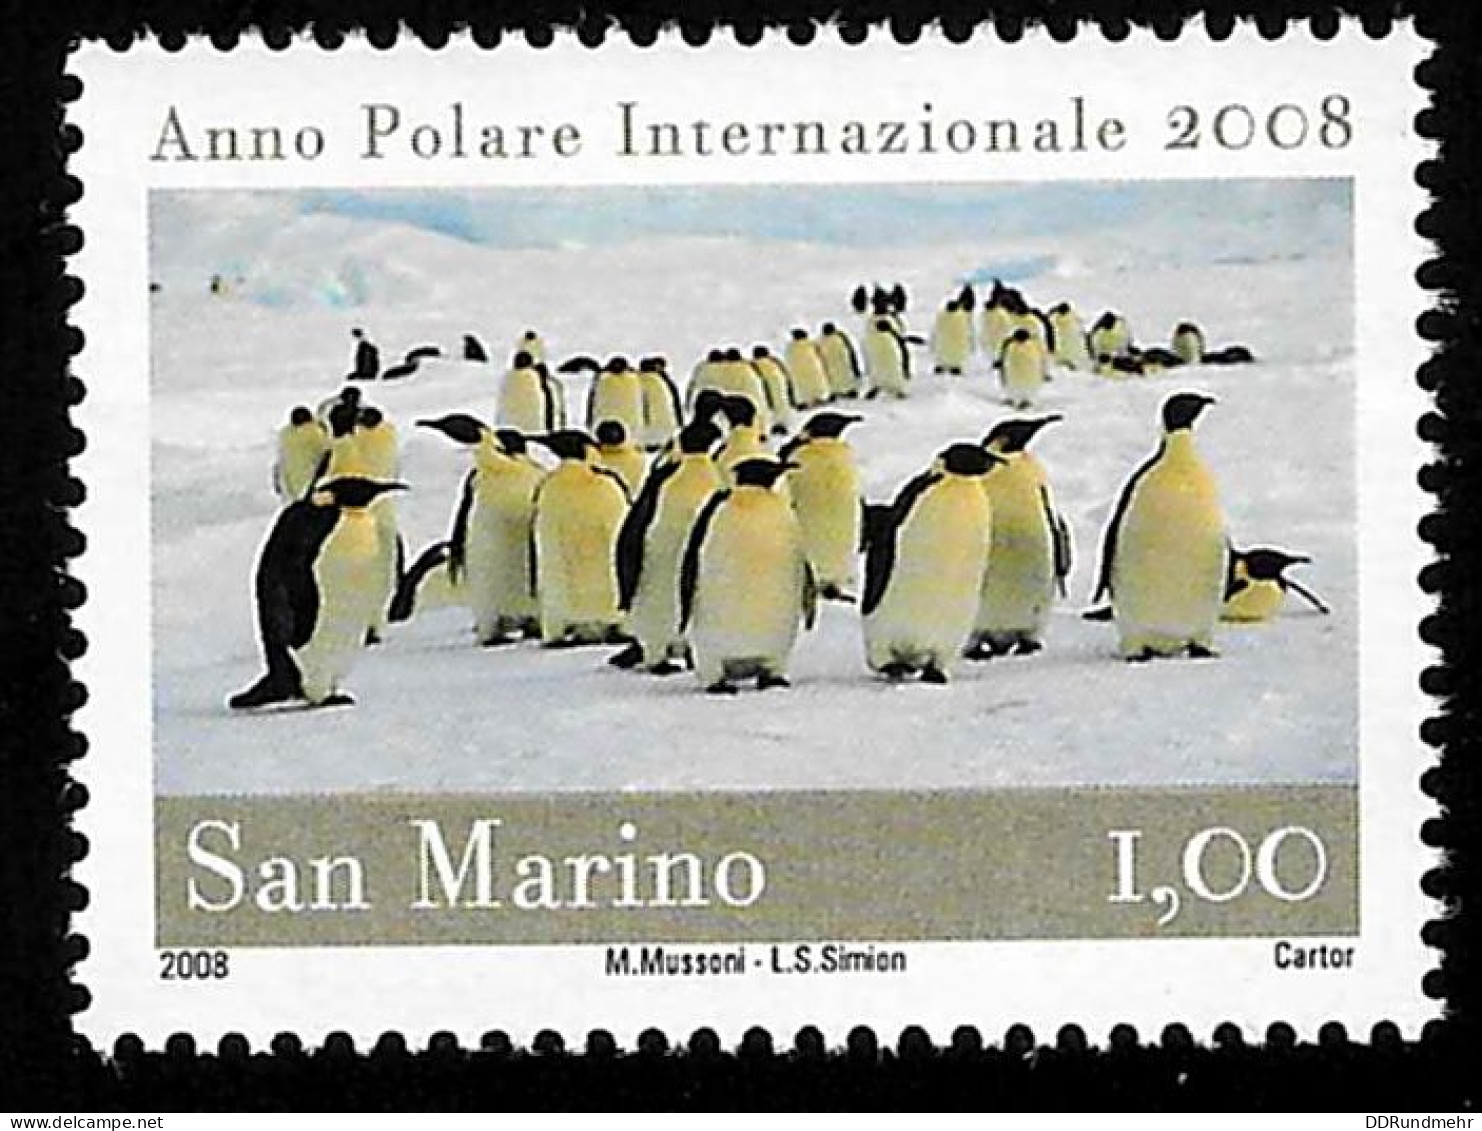 2008 Polar Year Michel SM 2359 Stamp Number SM 1769 Yvert Et Tellier SM 2152 Stanley Gibbons SM 2185 Xx MNH - Nuevos